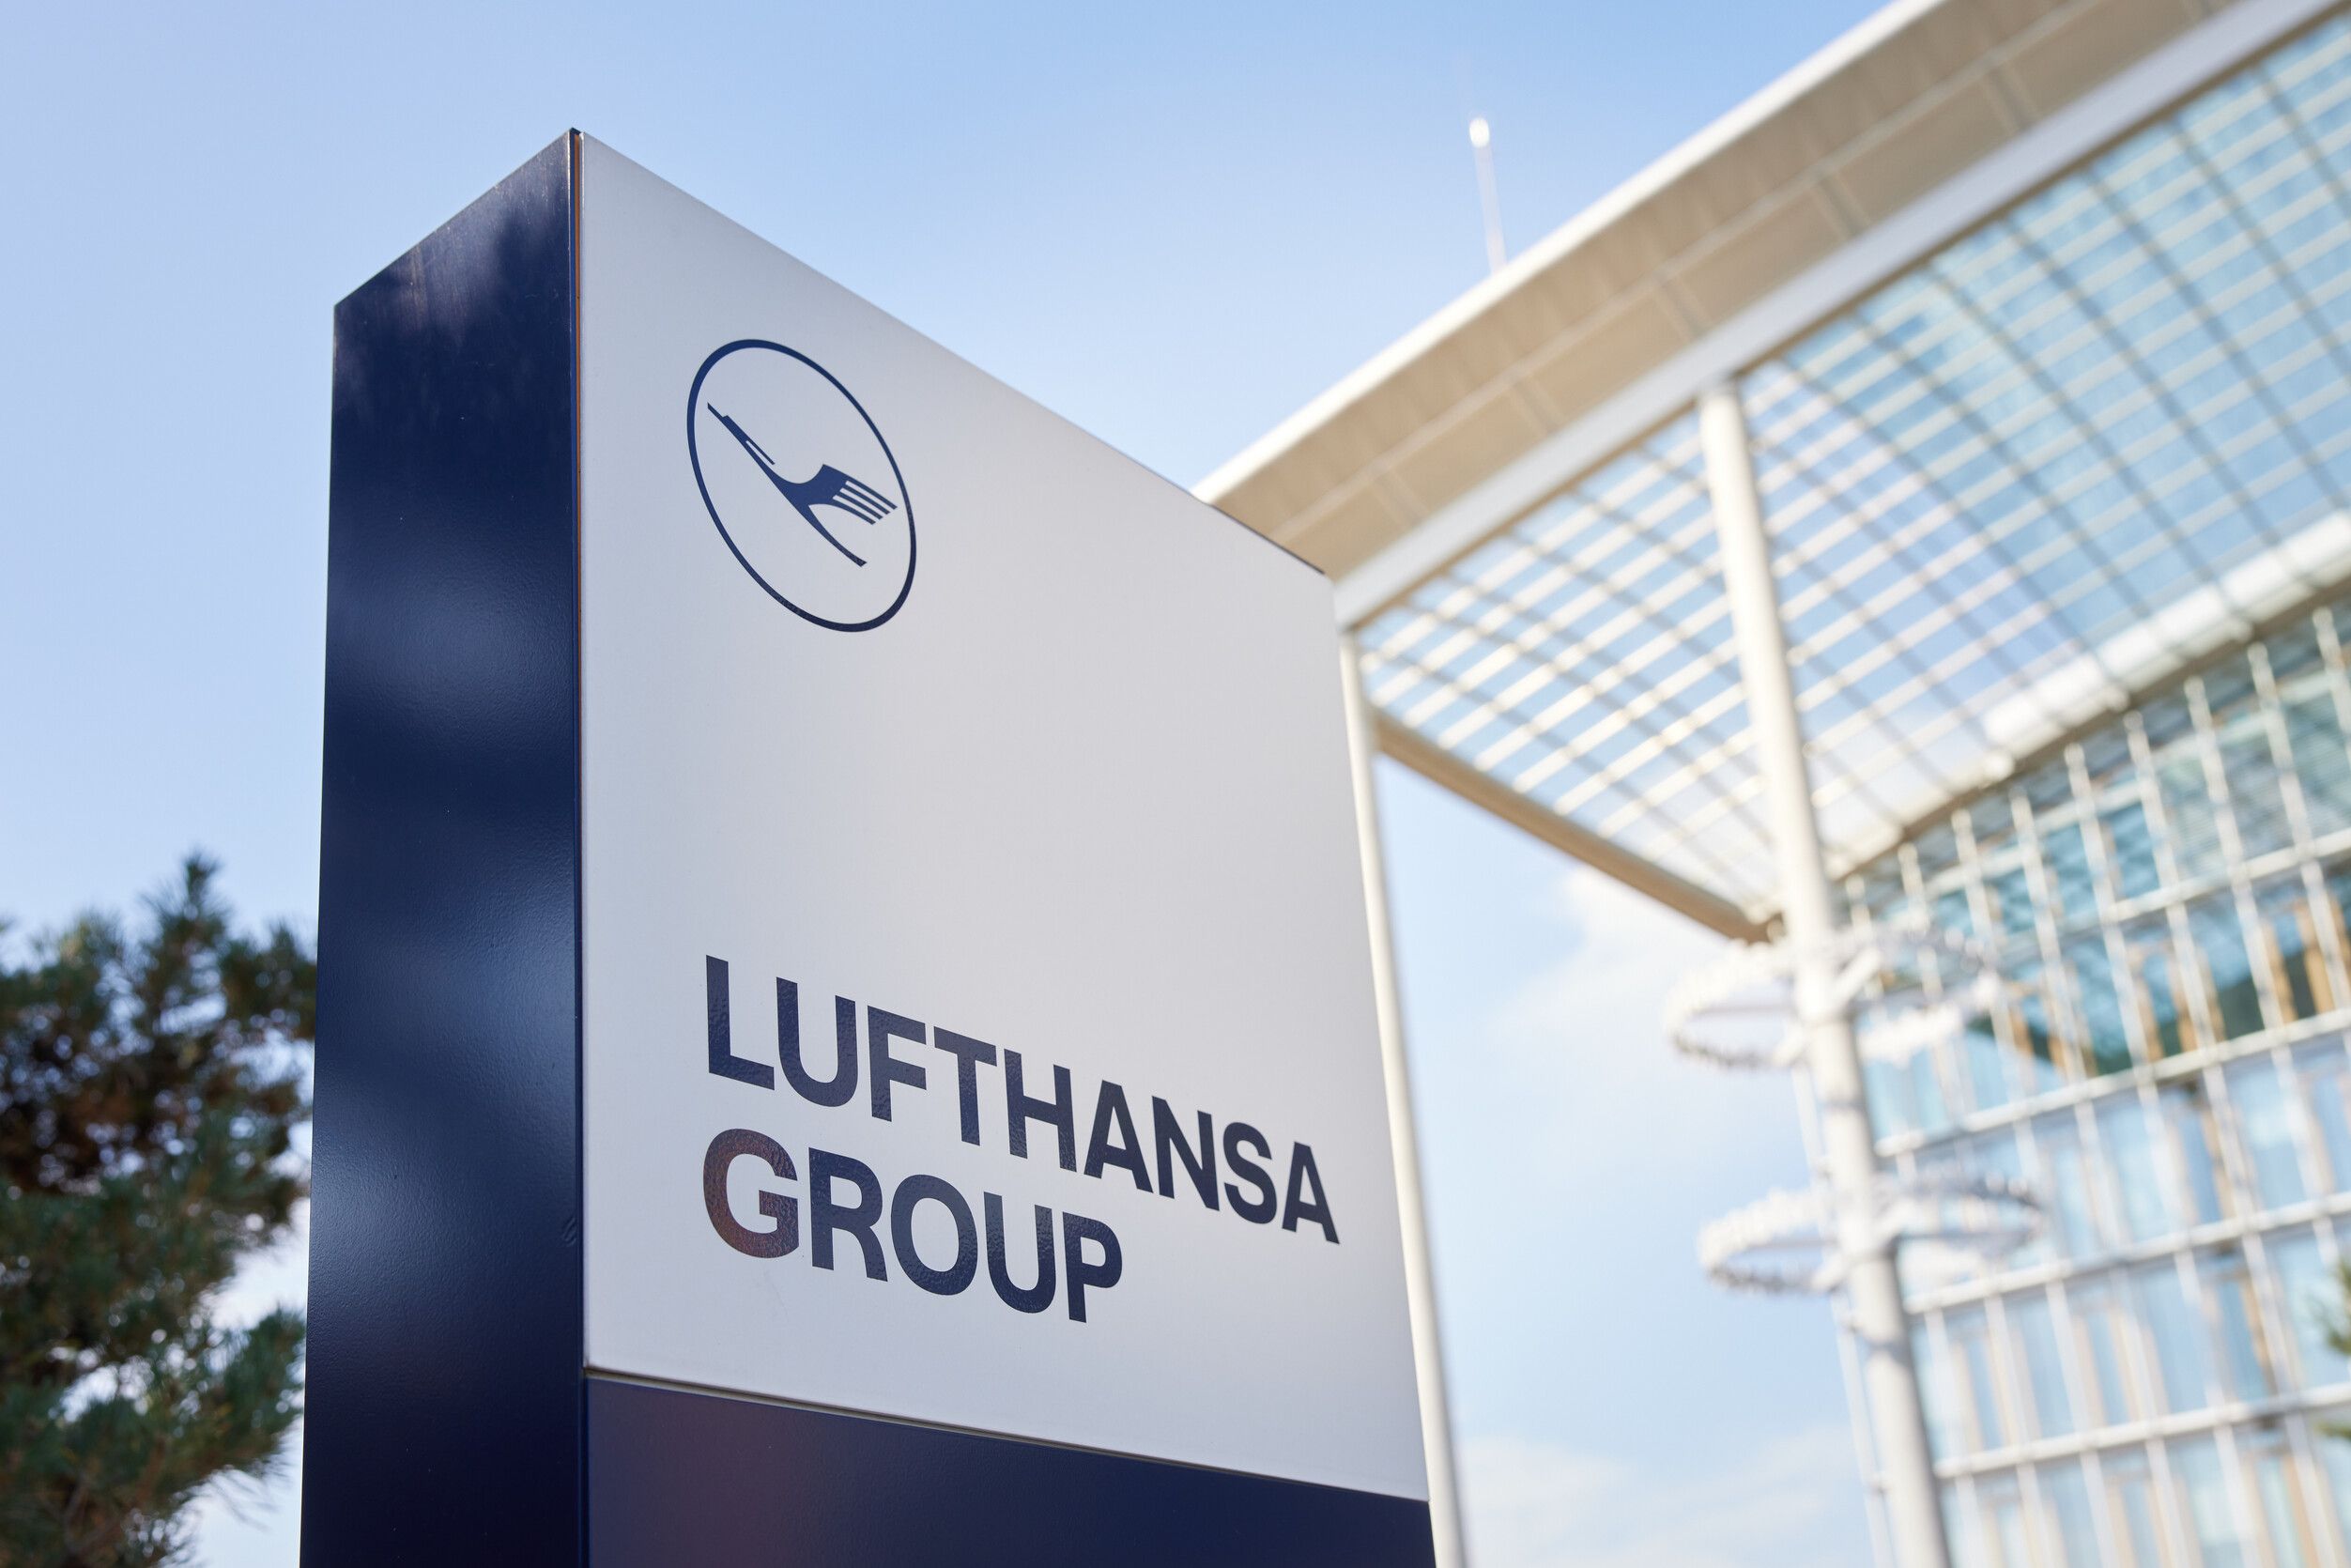 Lufthansa Group sign